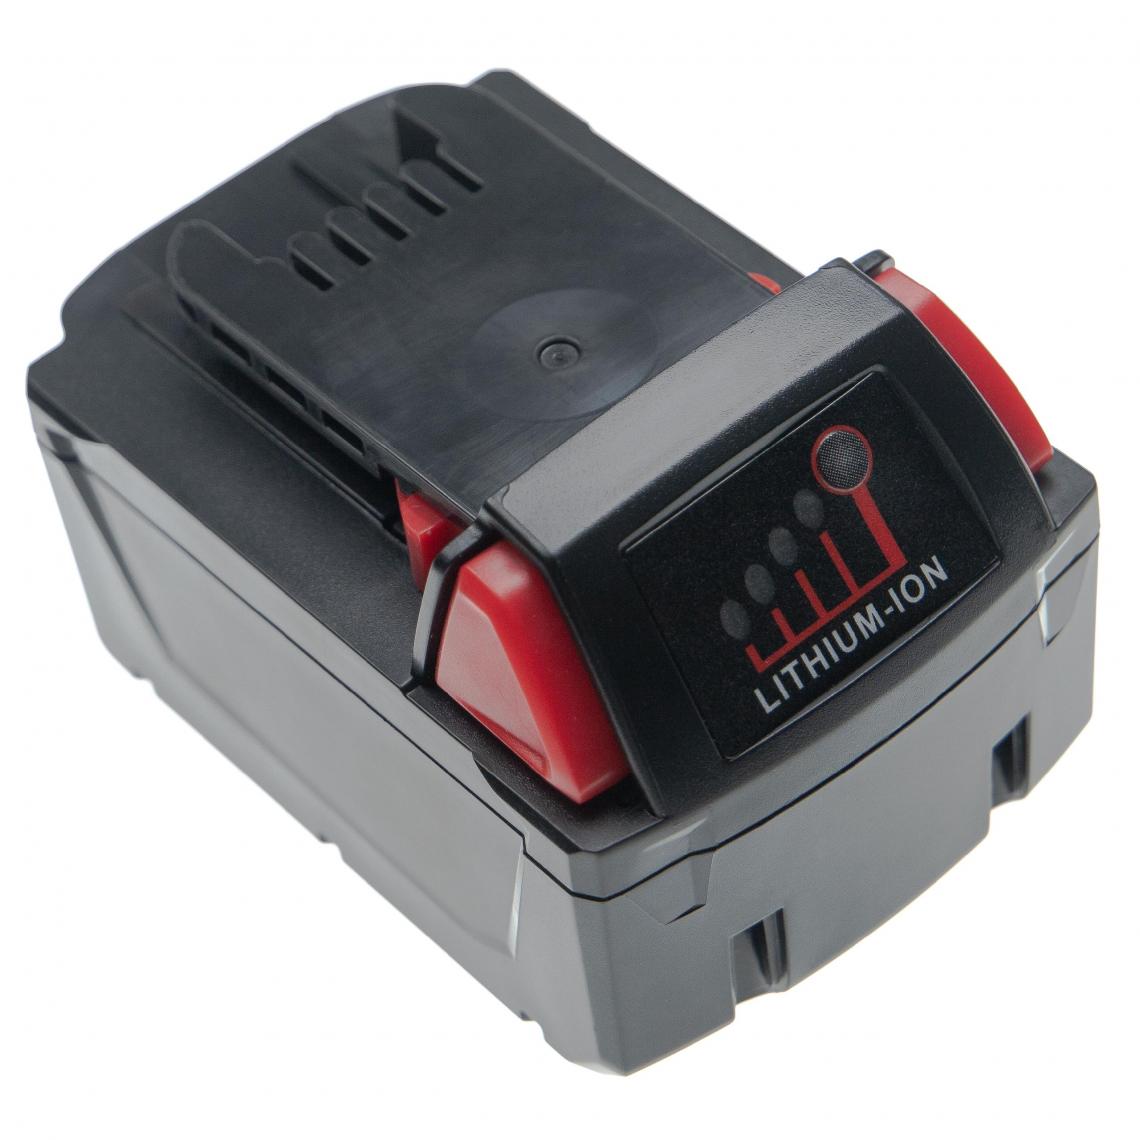 Vhbw - vhbw Batterie compatible avec AEG / Milwaukee C18 PD, HD18 AG, HD18 BS, HD18 CS, HD18 DD, HD18 H outil électrique (4000mAh Li-ion 18V) - Accessoires vissage, perçage